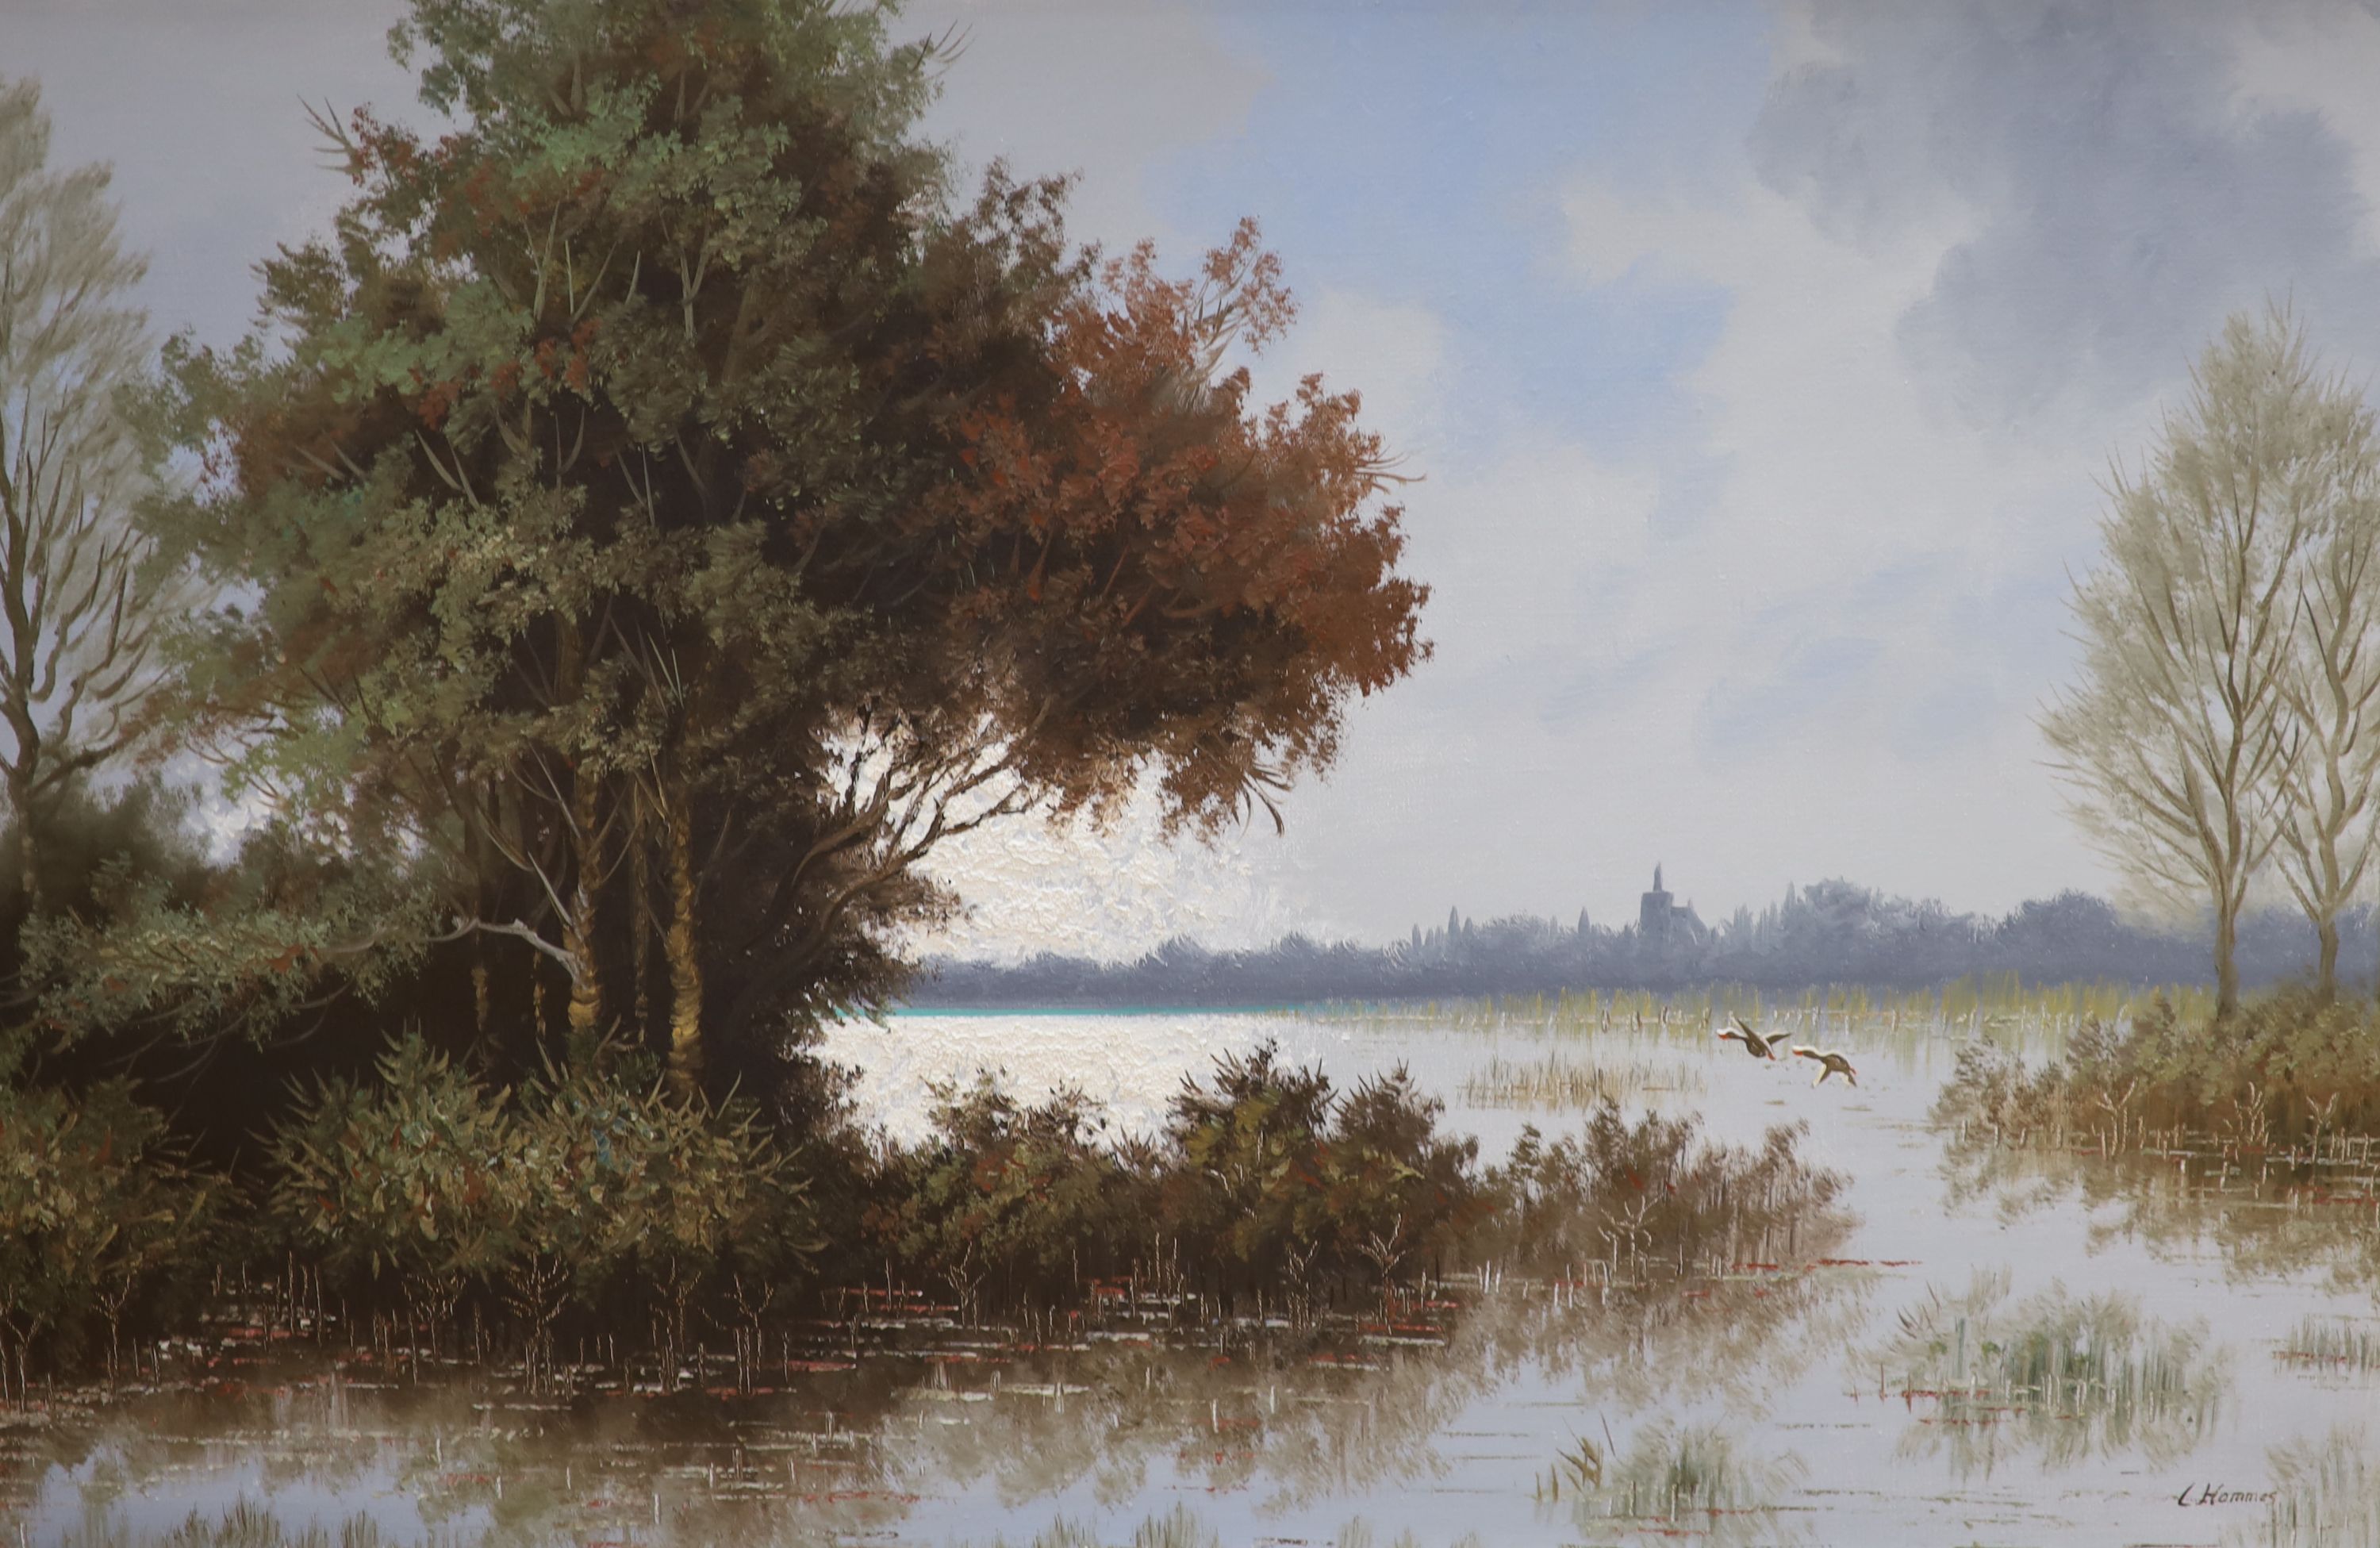 C* Hommes (20th century), oil on canvas, lake scene with ducks, 60 x 90cm